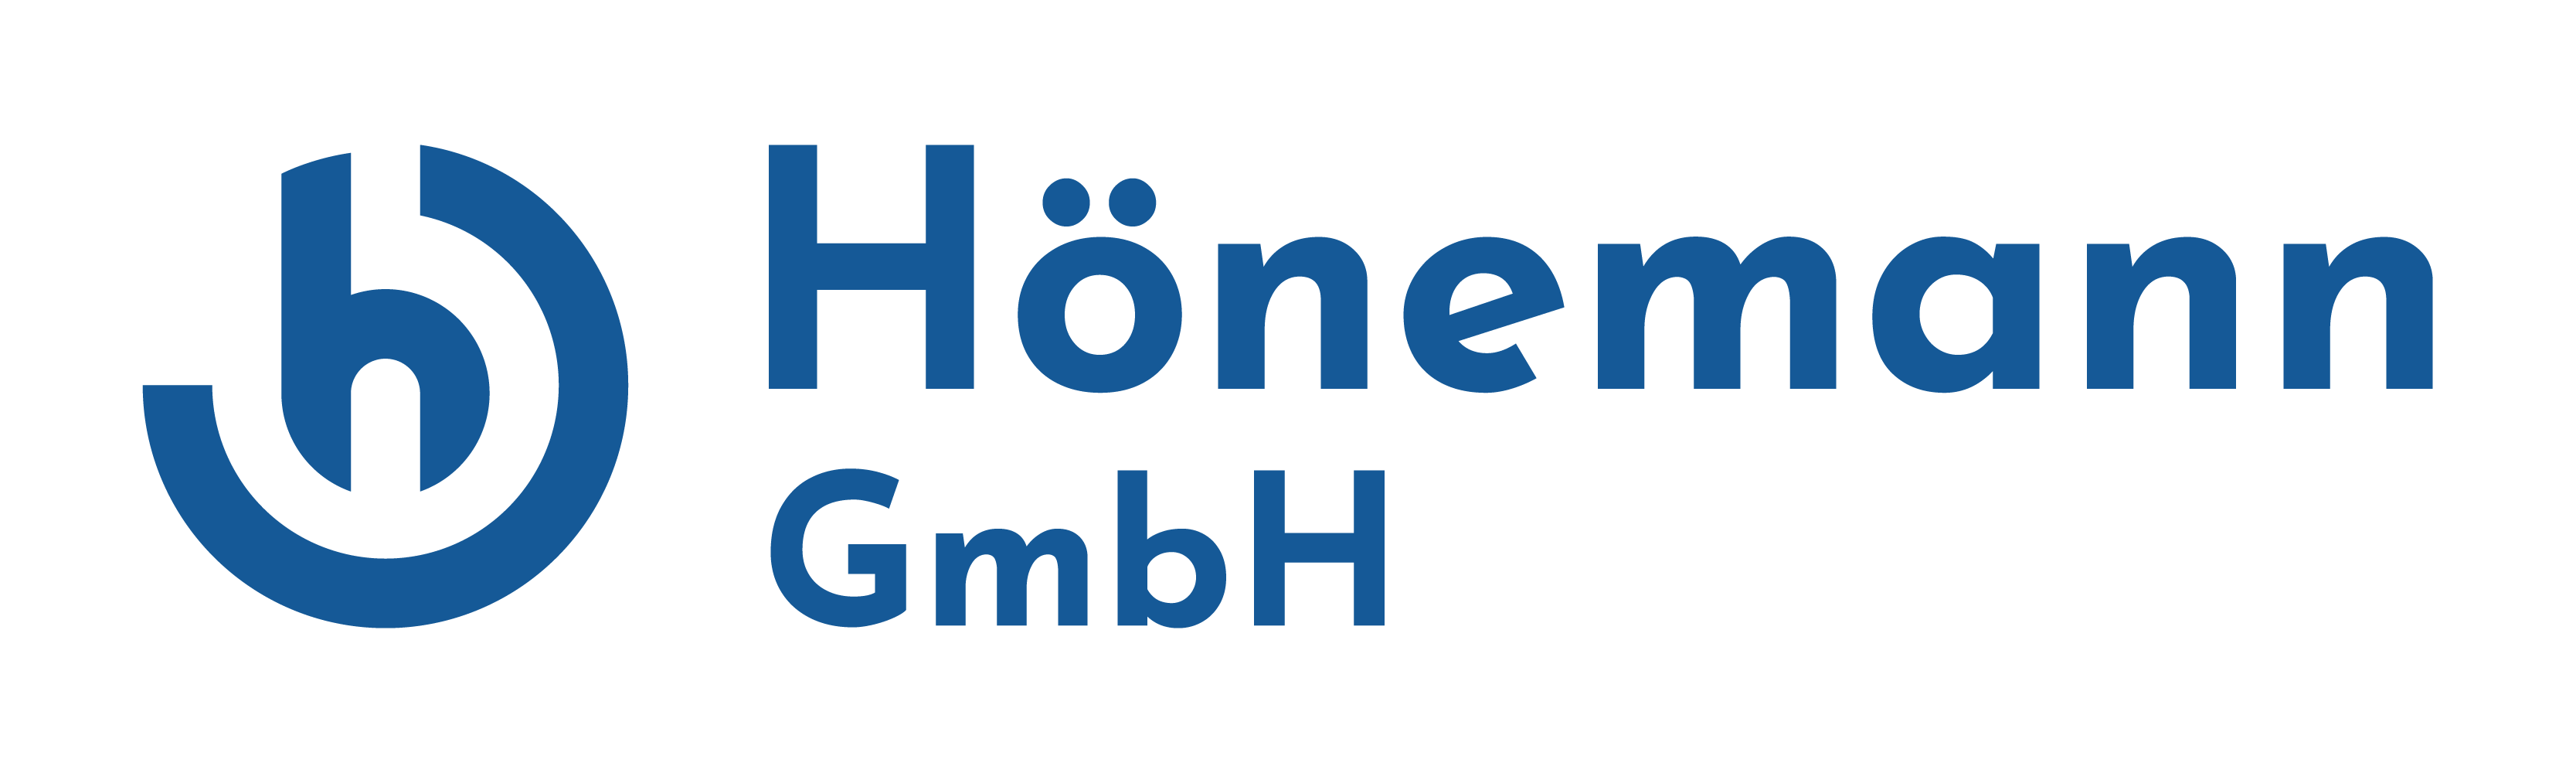 Logo Hoenemann GmbH